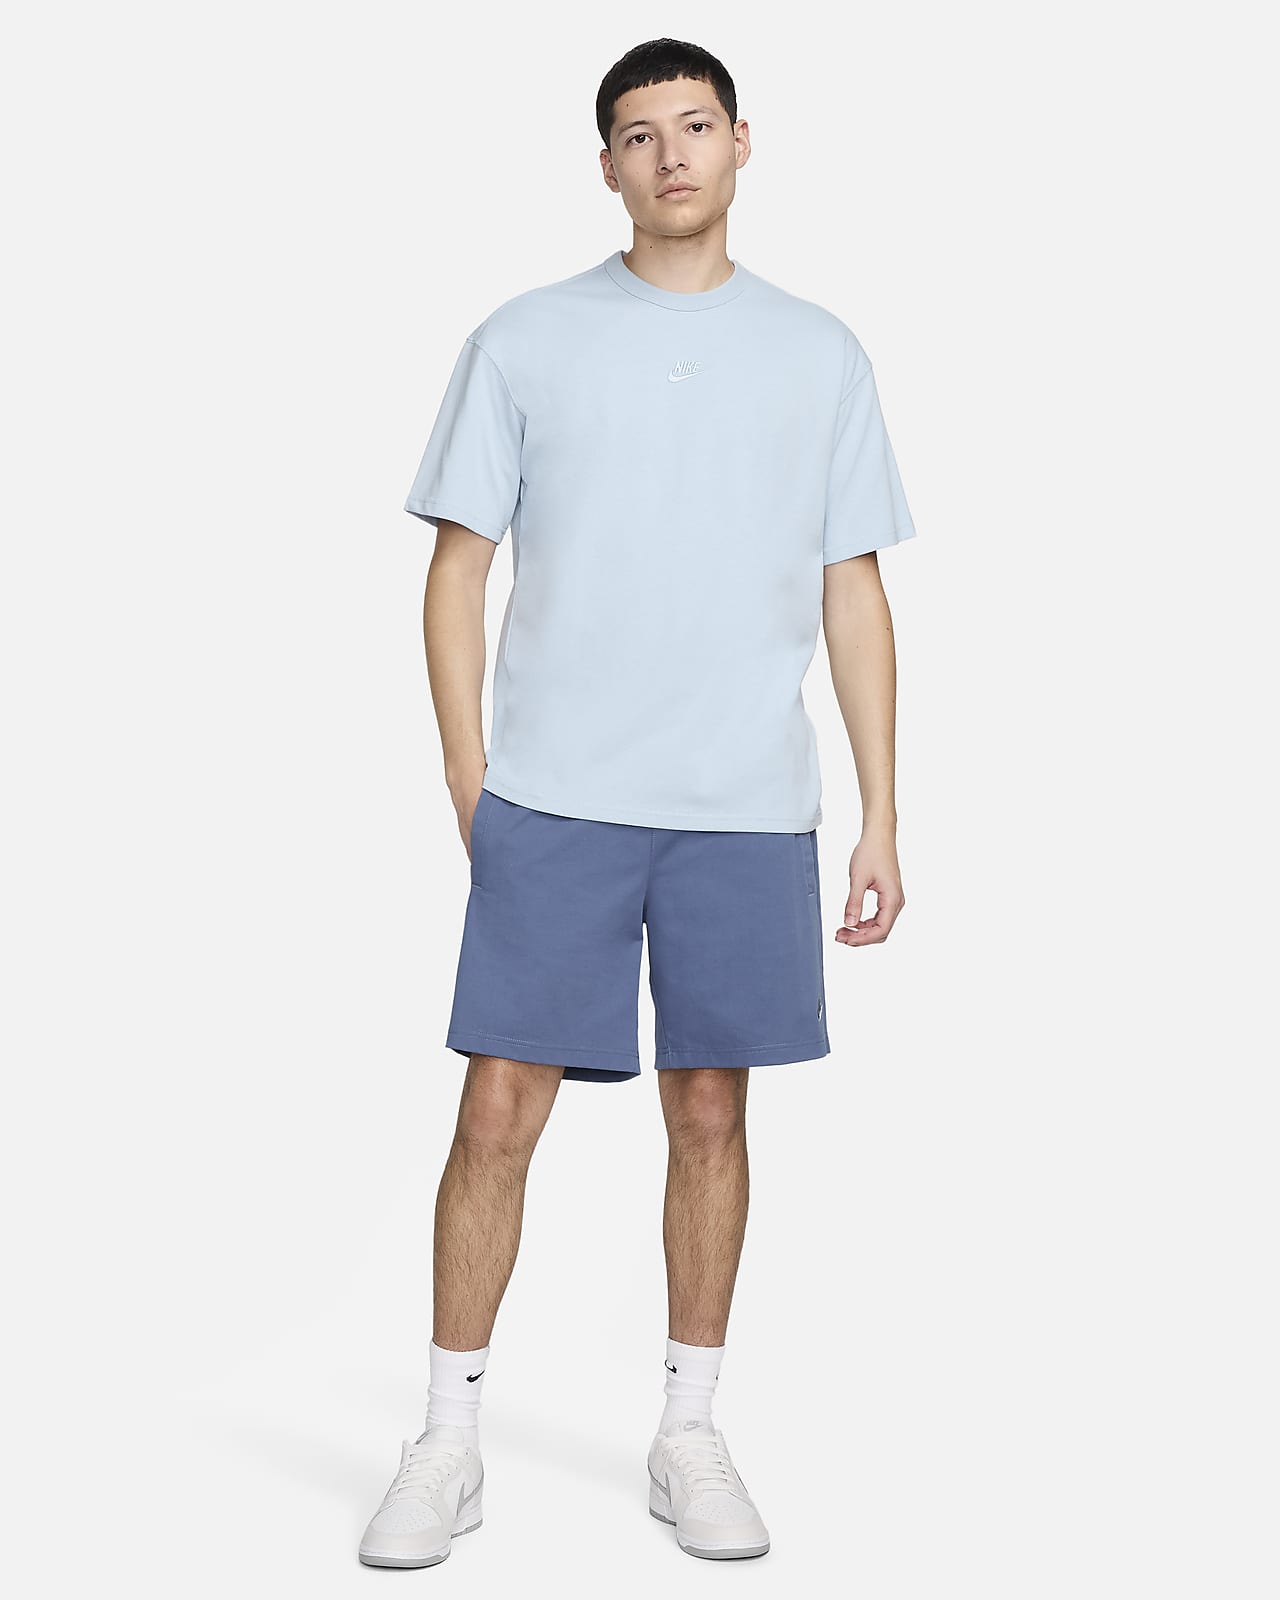 Nike Sportswear Womens Essential T-Shirt (X-Large, Medium Olive/White)